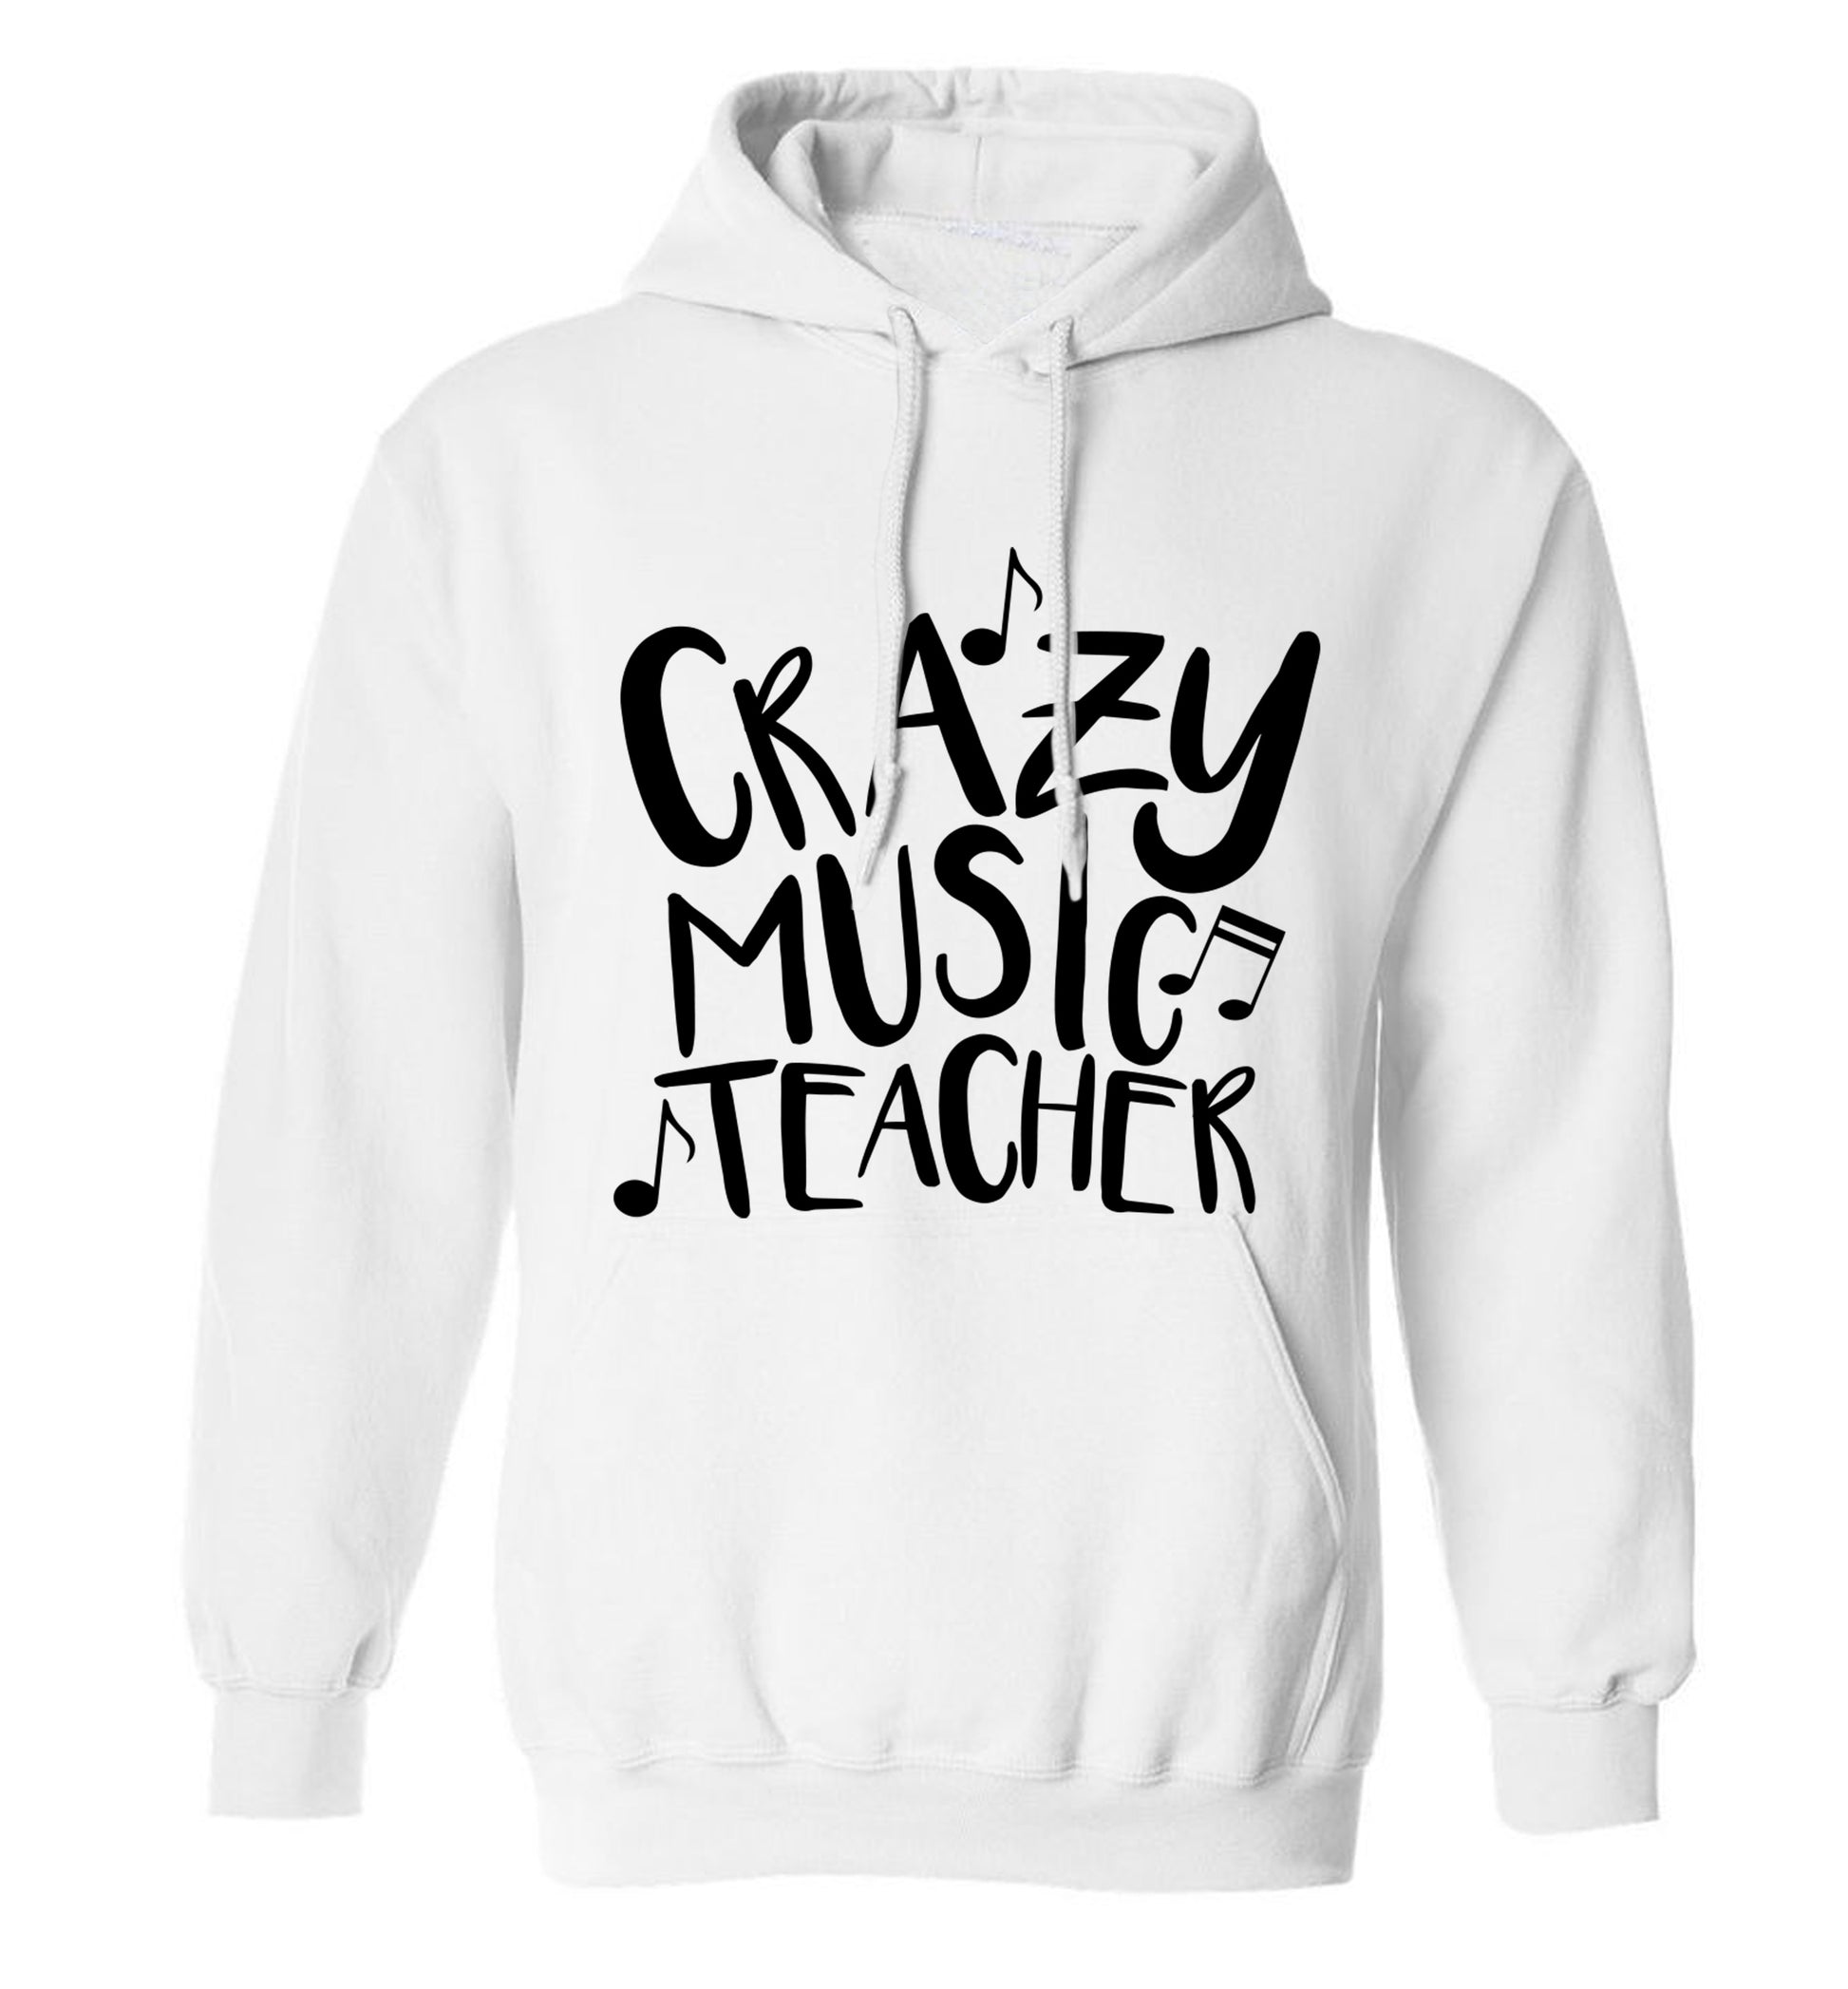 Crazy music teacher adults unisex white hoodie 2XL